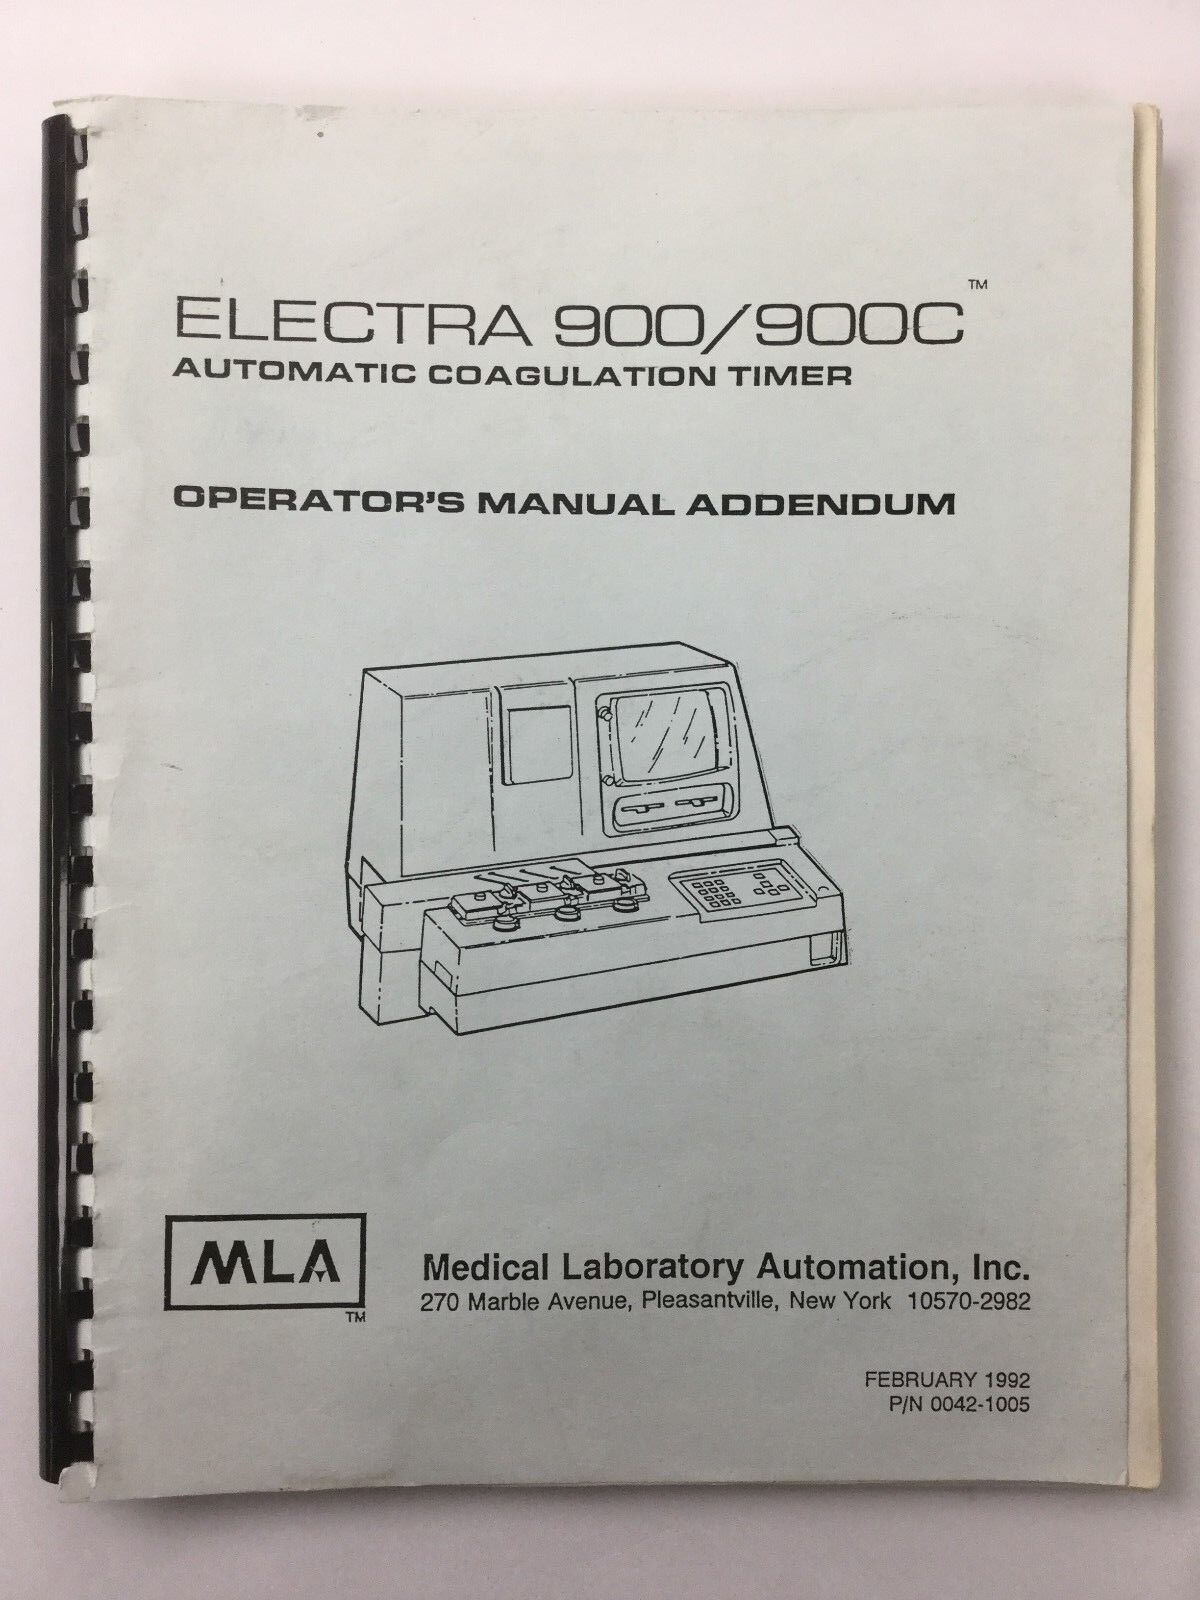 Medical Laboratory Operators Manual ADDENDUM for Electra 900 and 900C